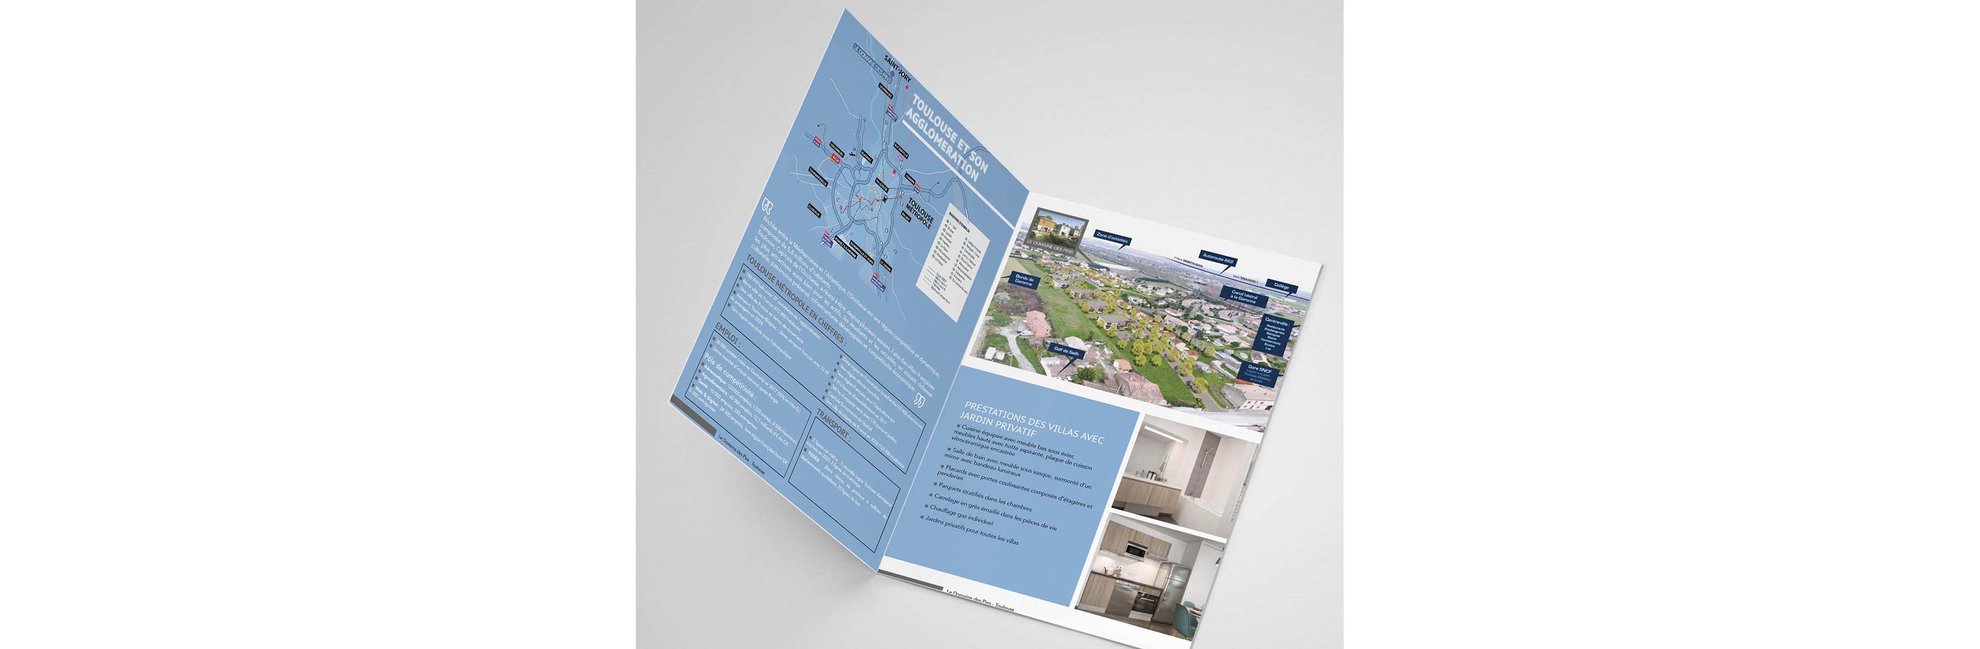 Refonte brochure 2 Commerciale projet immobilier